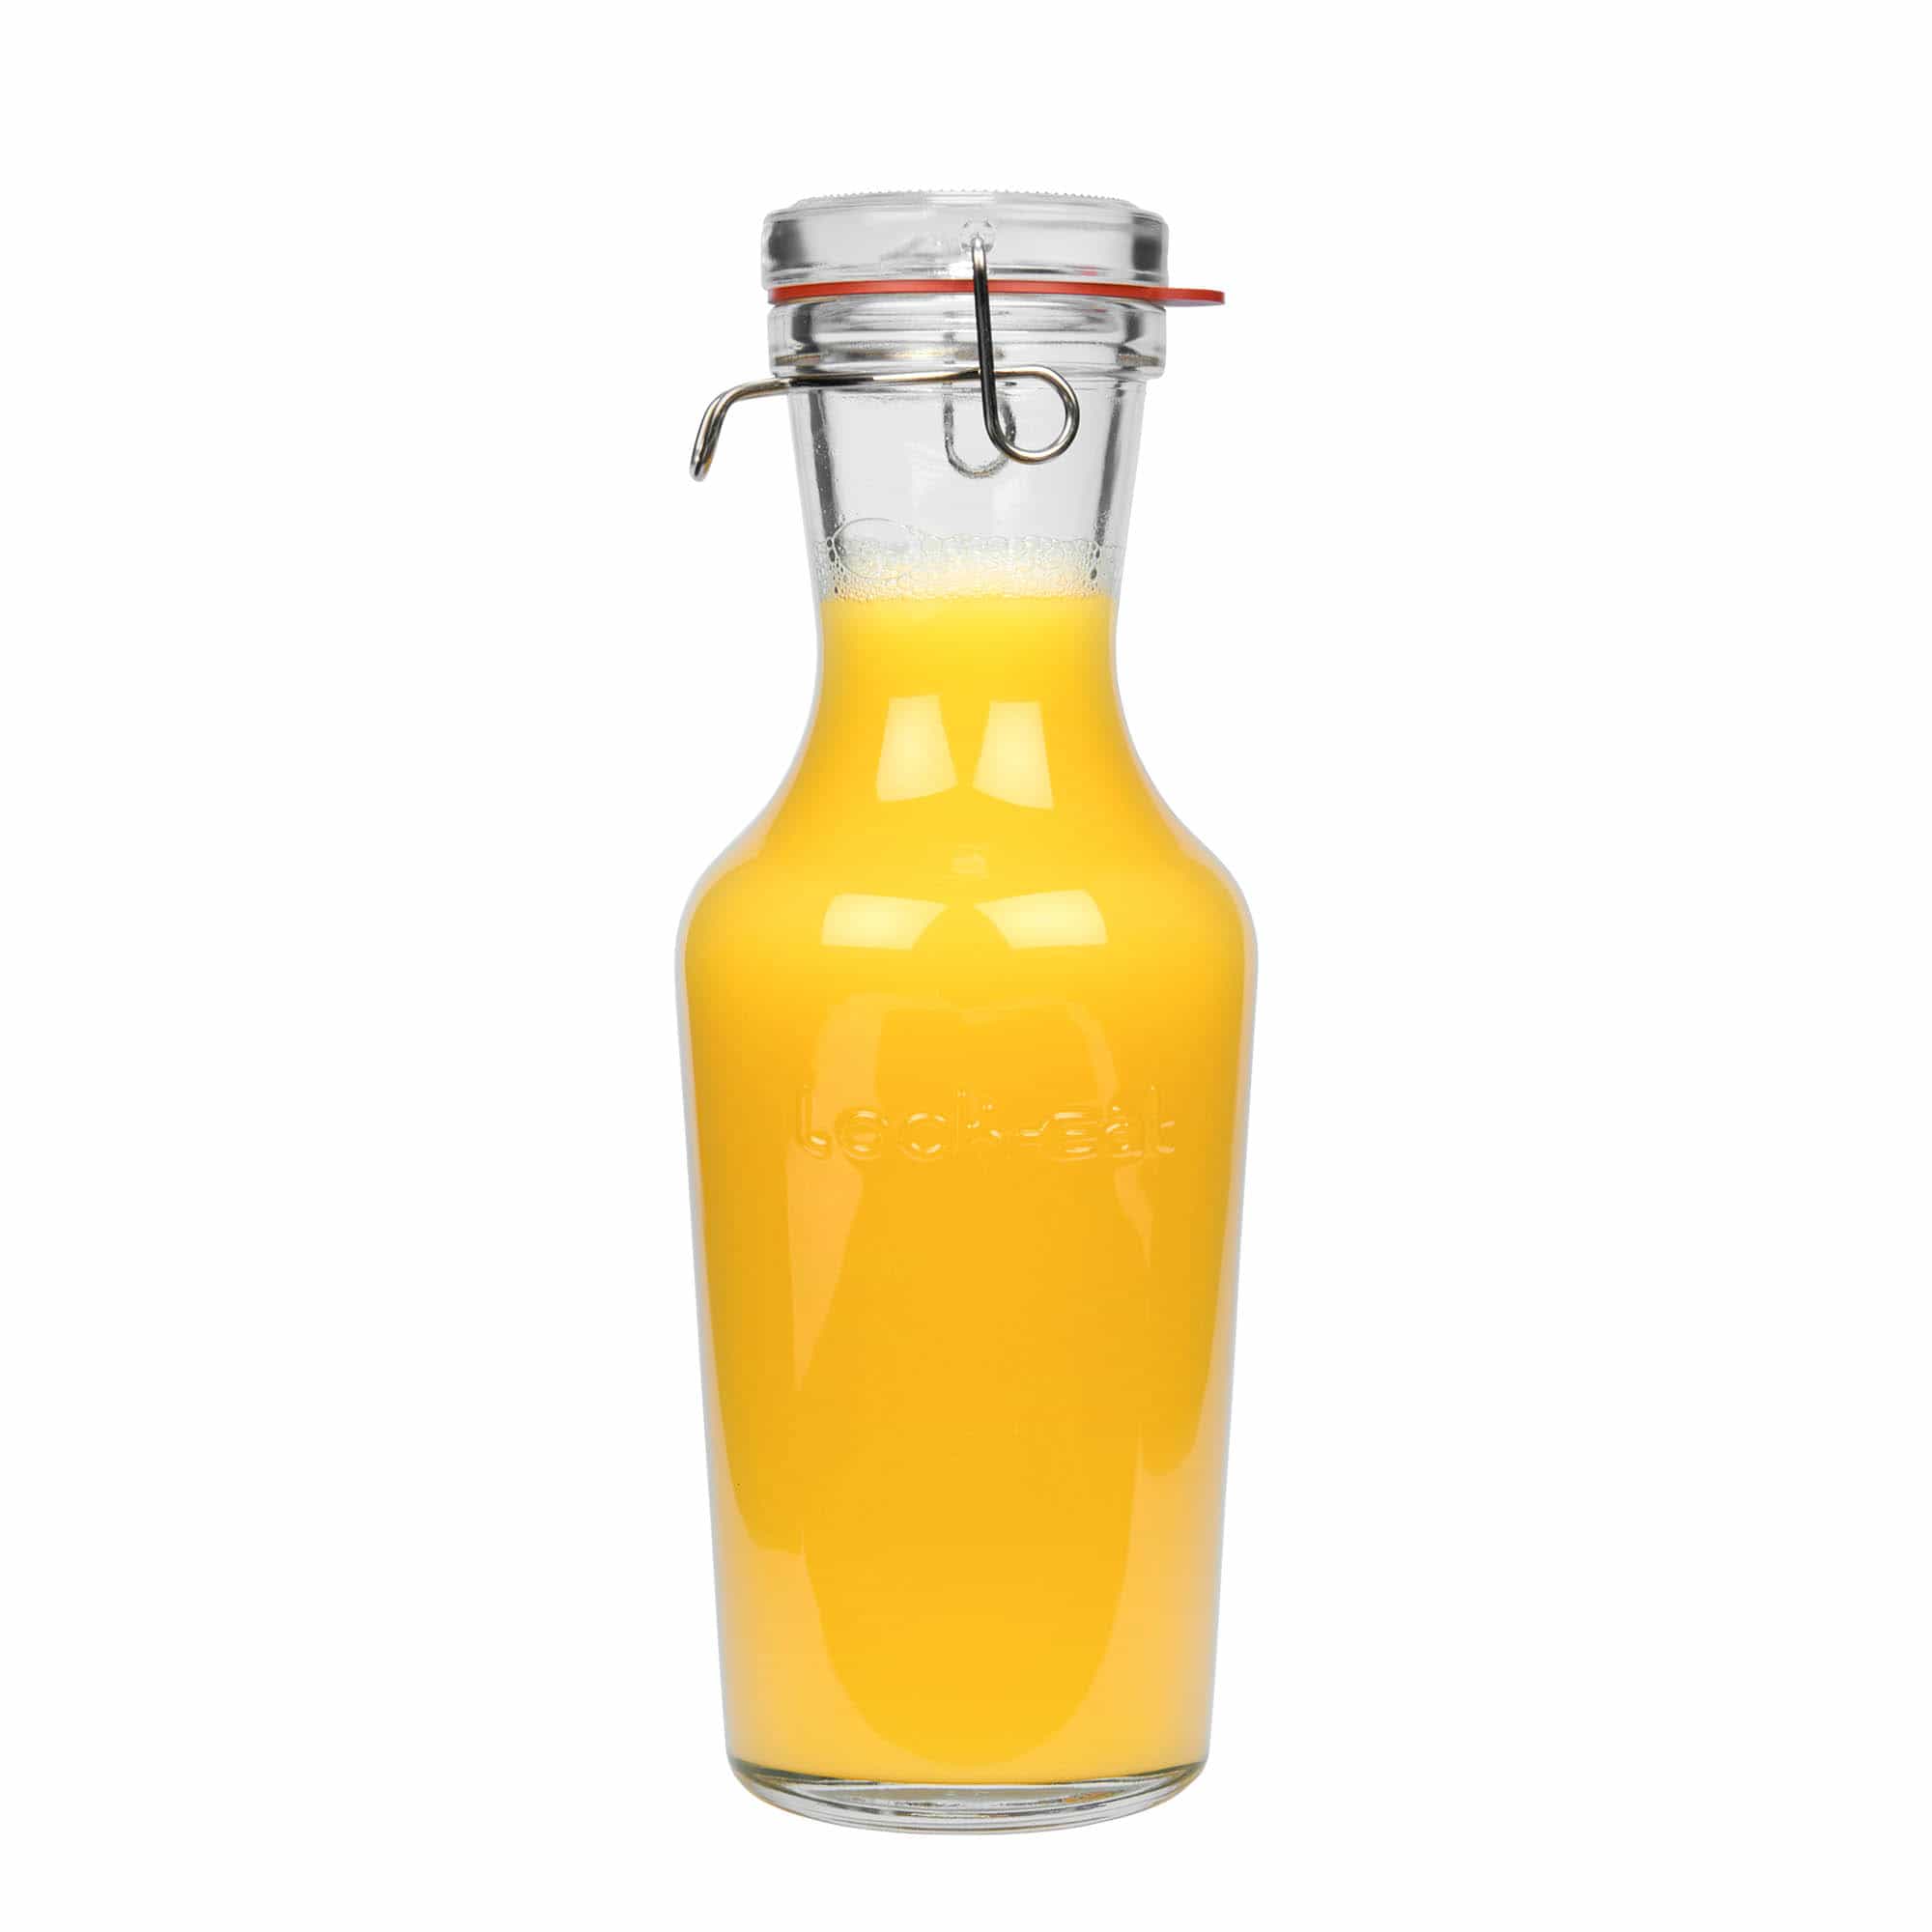 1,000 ml glass carafe 'Lock-Eat', closure: clip top